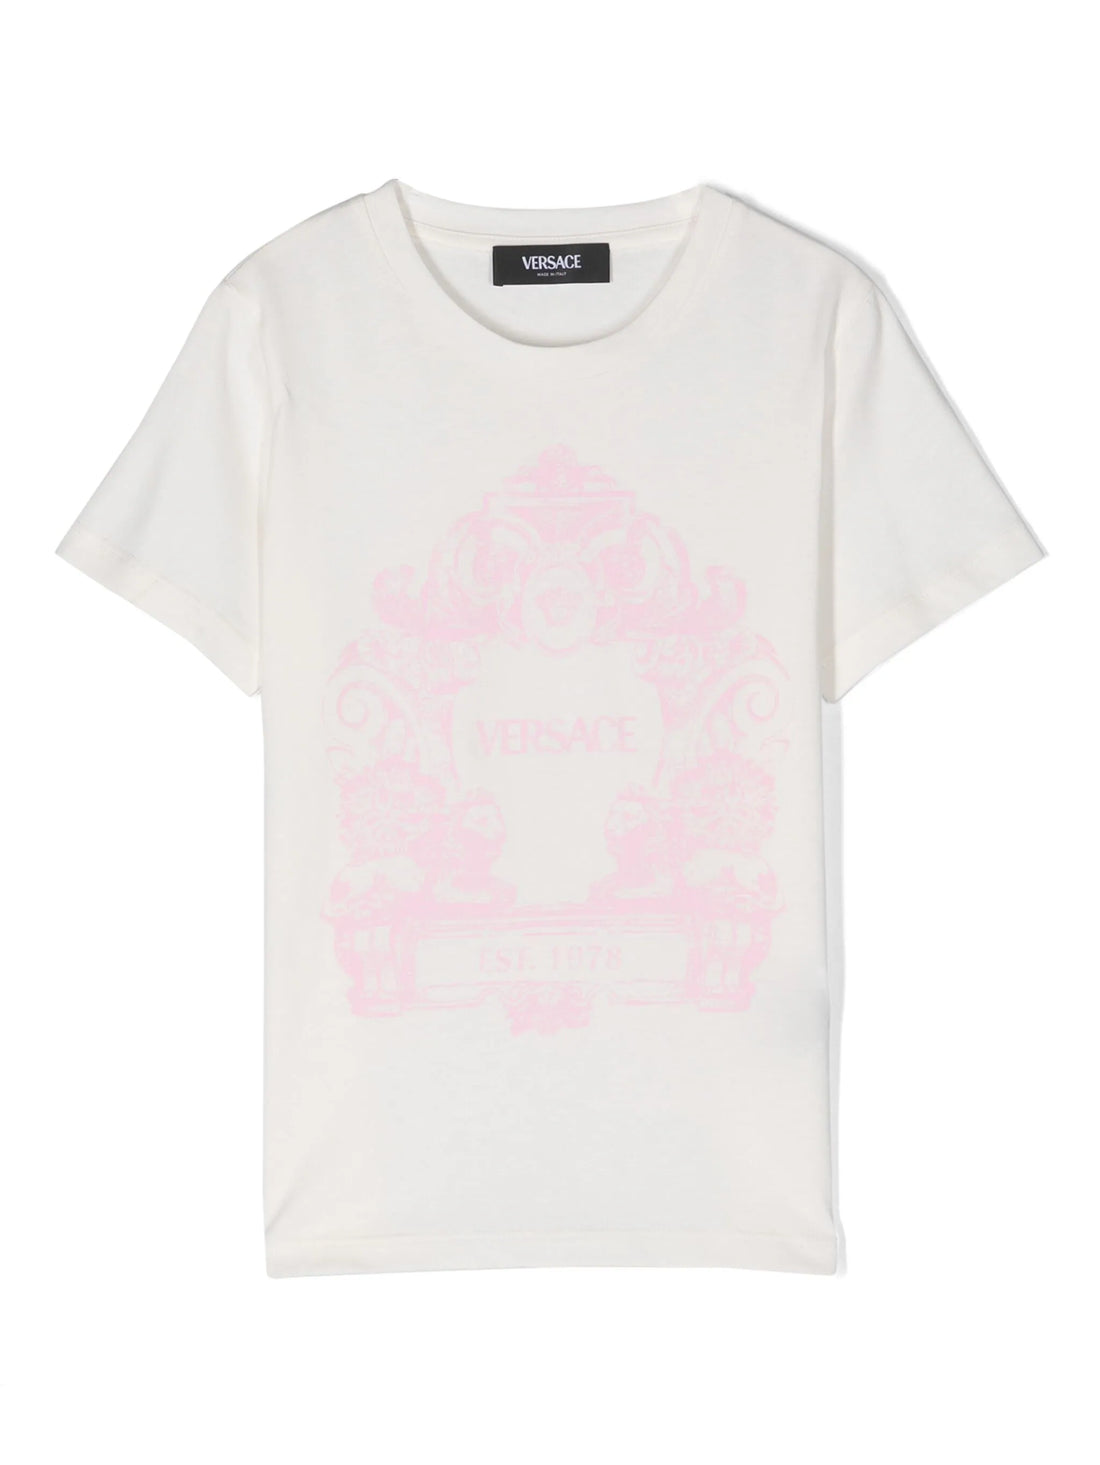 VERSACE KIDS Girls Cartouche Print T-Shirt White/Pink - MAISONDEFASHION.COM